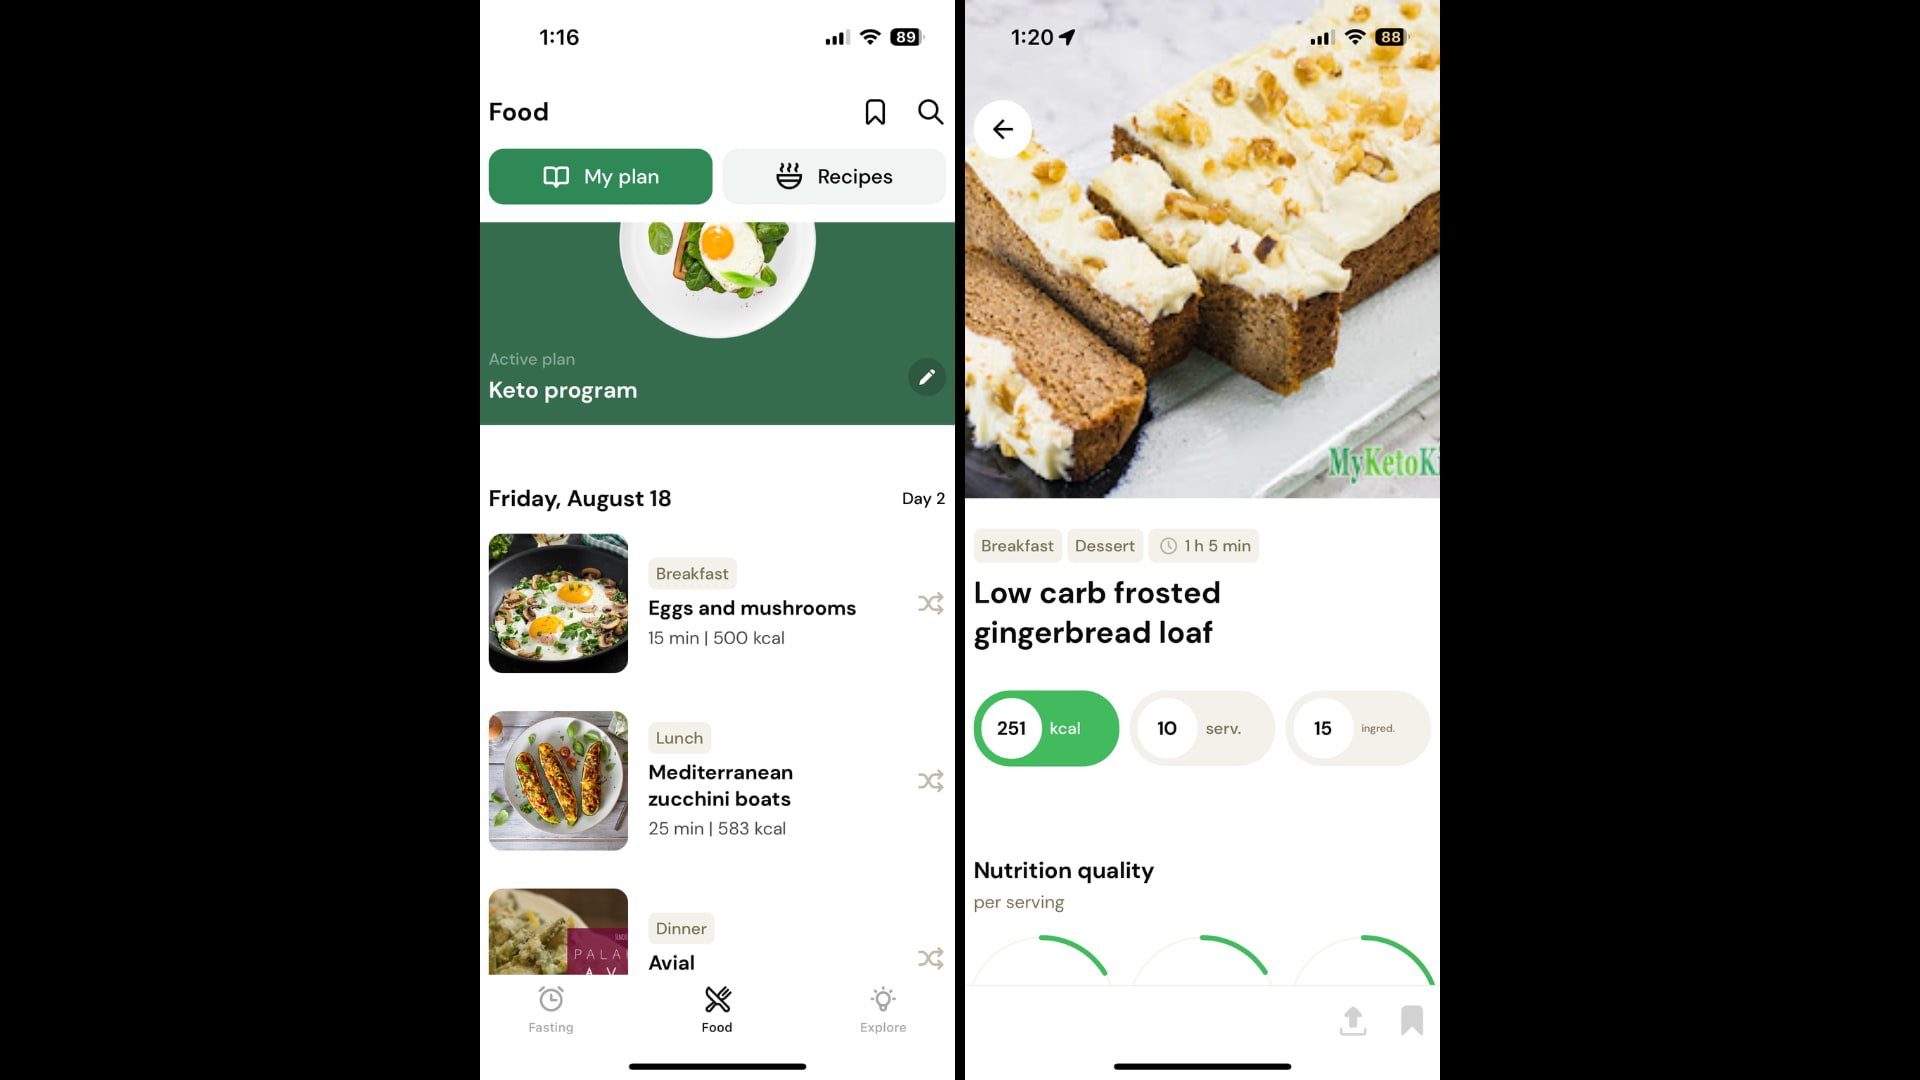 Lasta app screenshot - keto food program and recipe for low carb gingerbread loaf